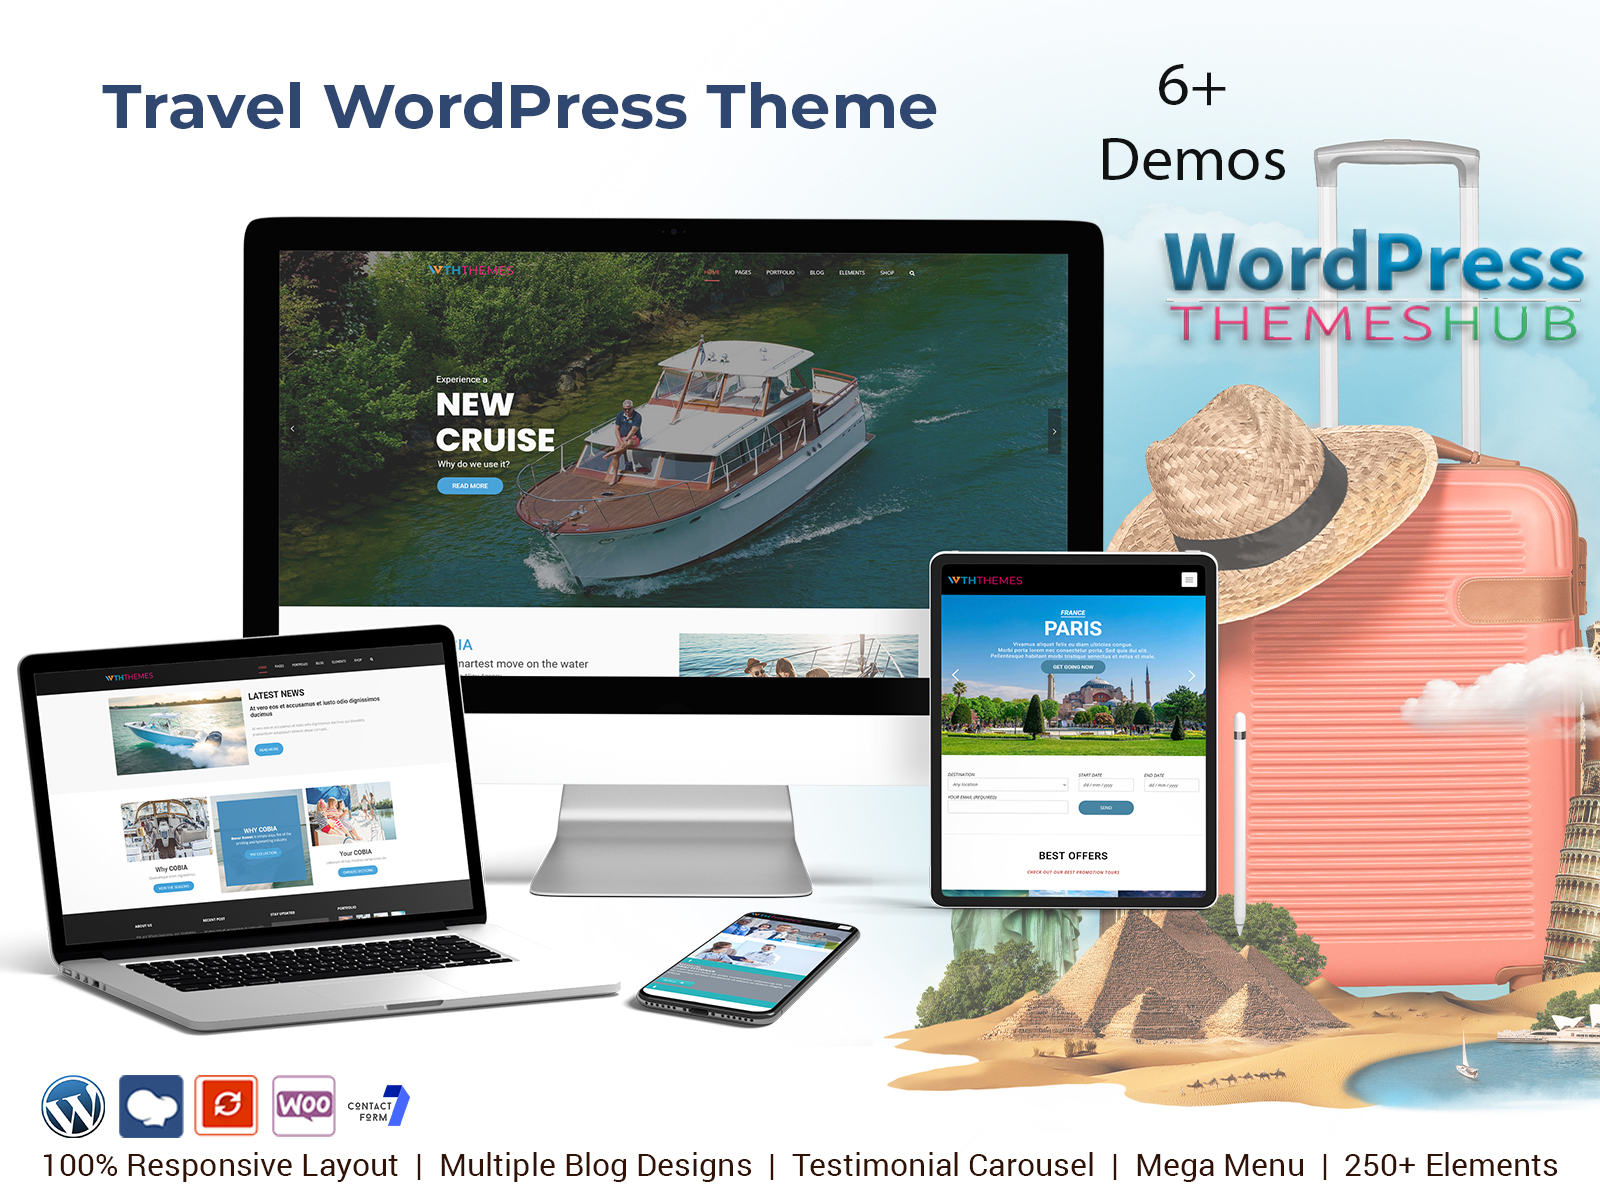 The Best Travel WordPress Theme To Make Travel Websites